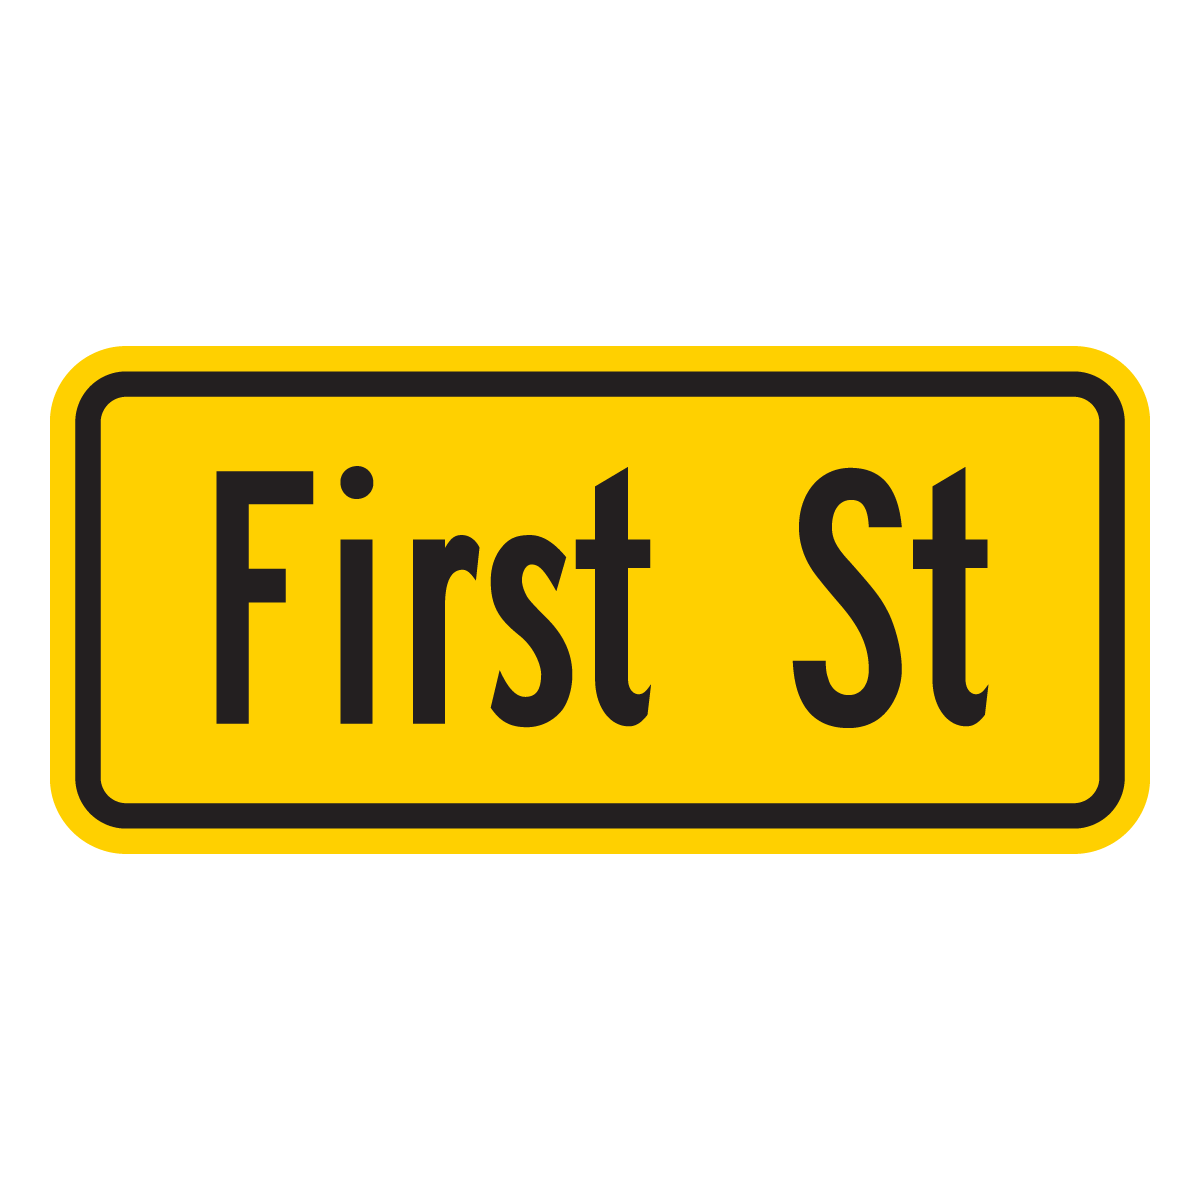 W16-8P Street Name (1 line) (plaque)